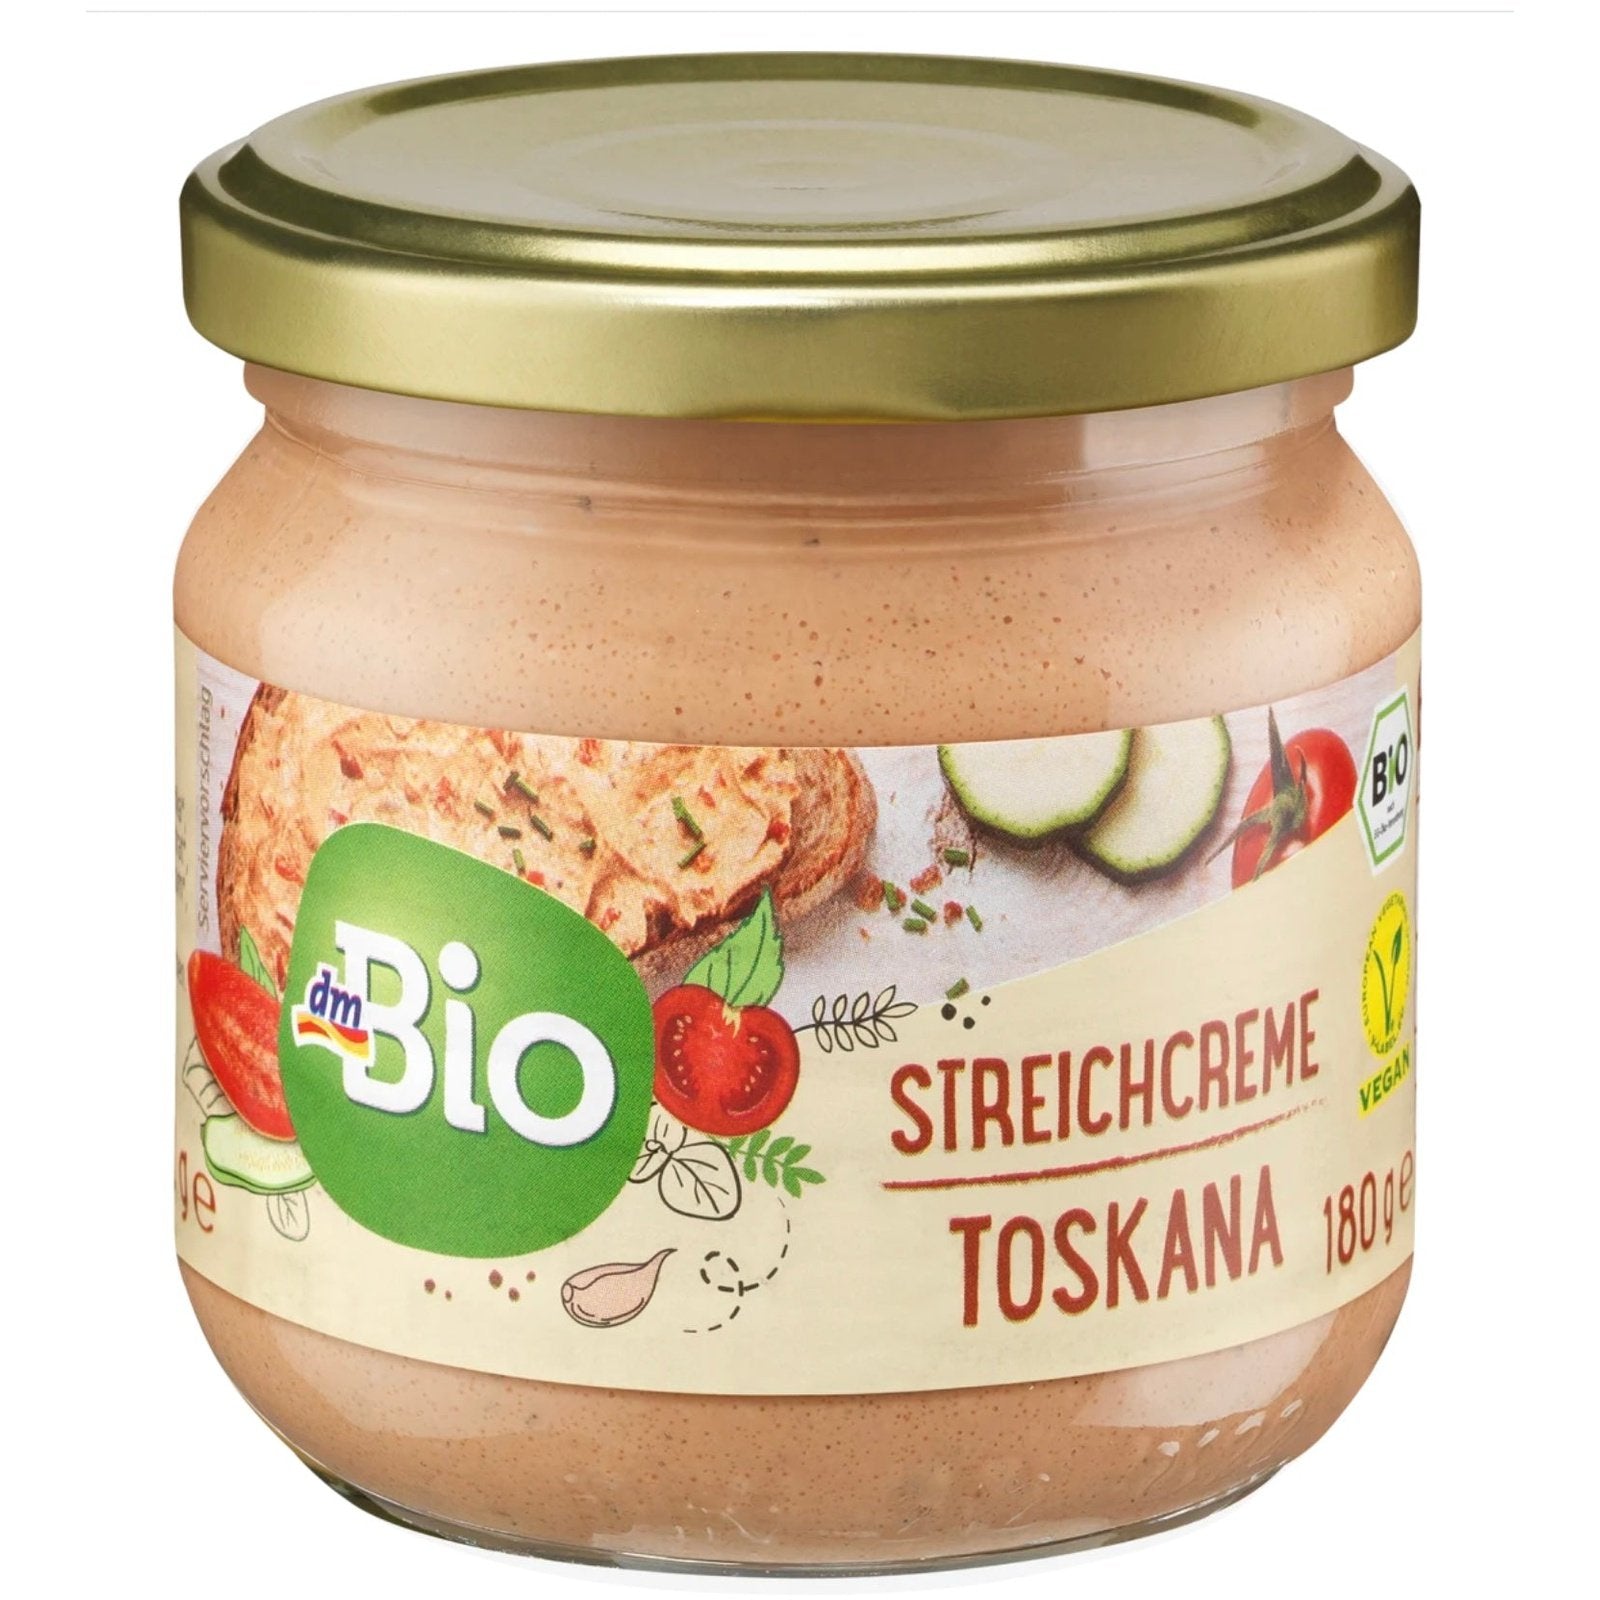 bio organic vegan spread tuscany in a glass jar 180g